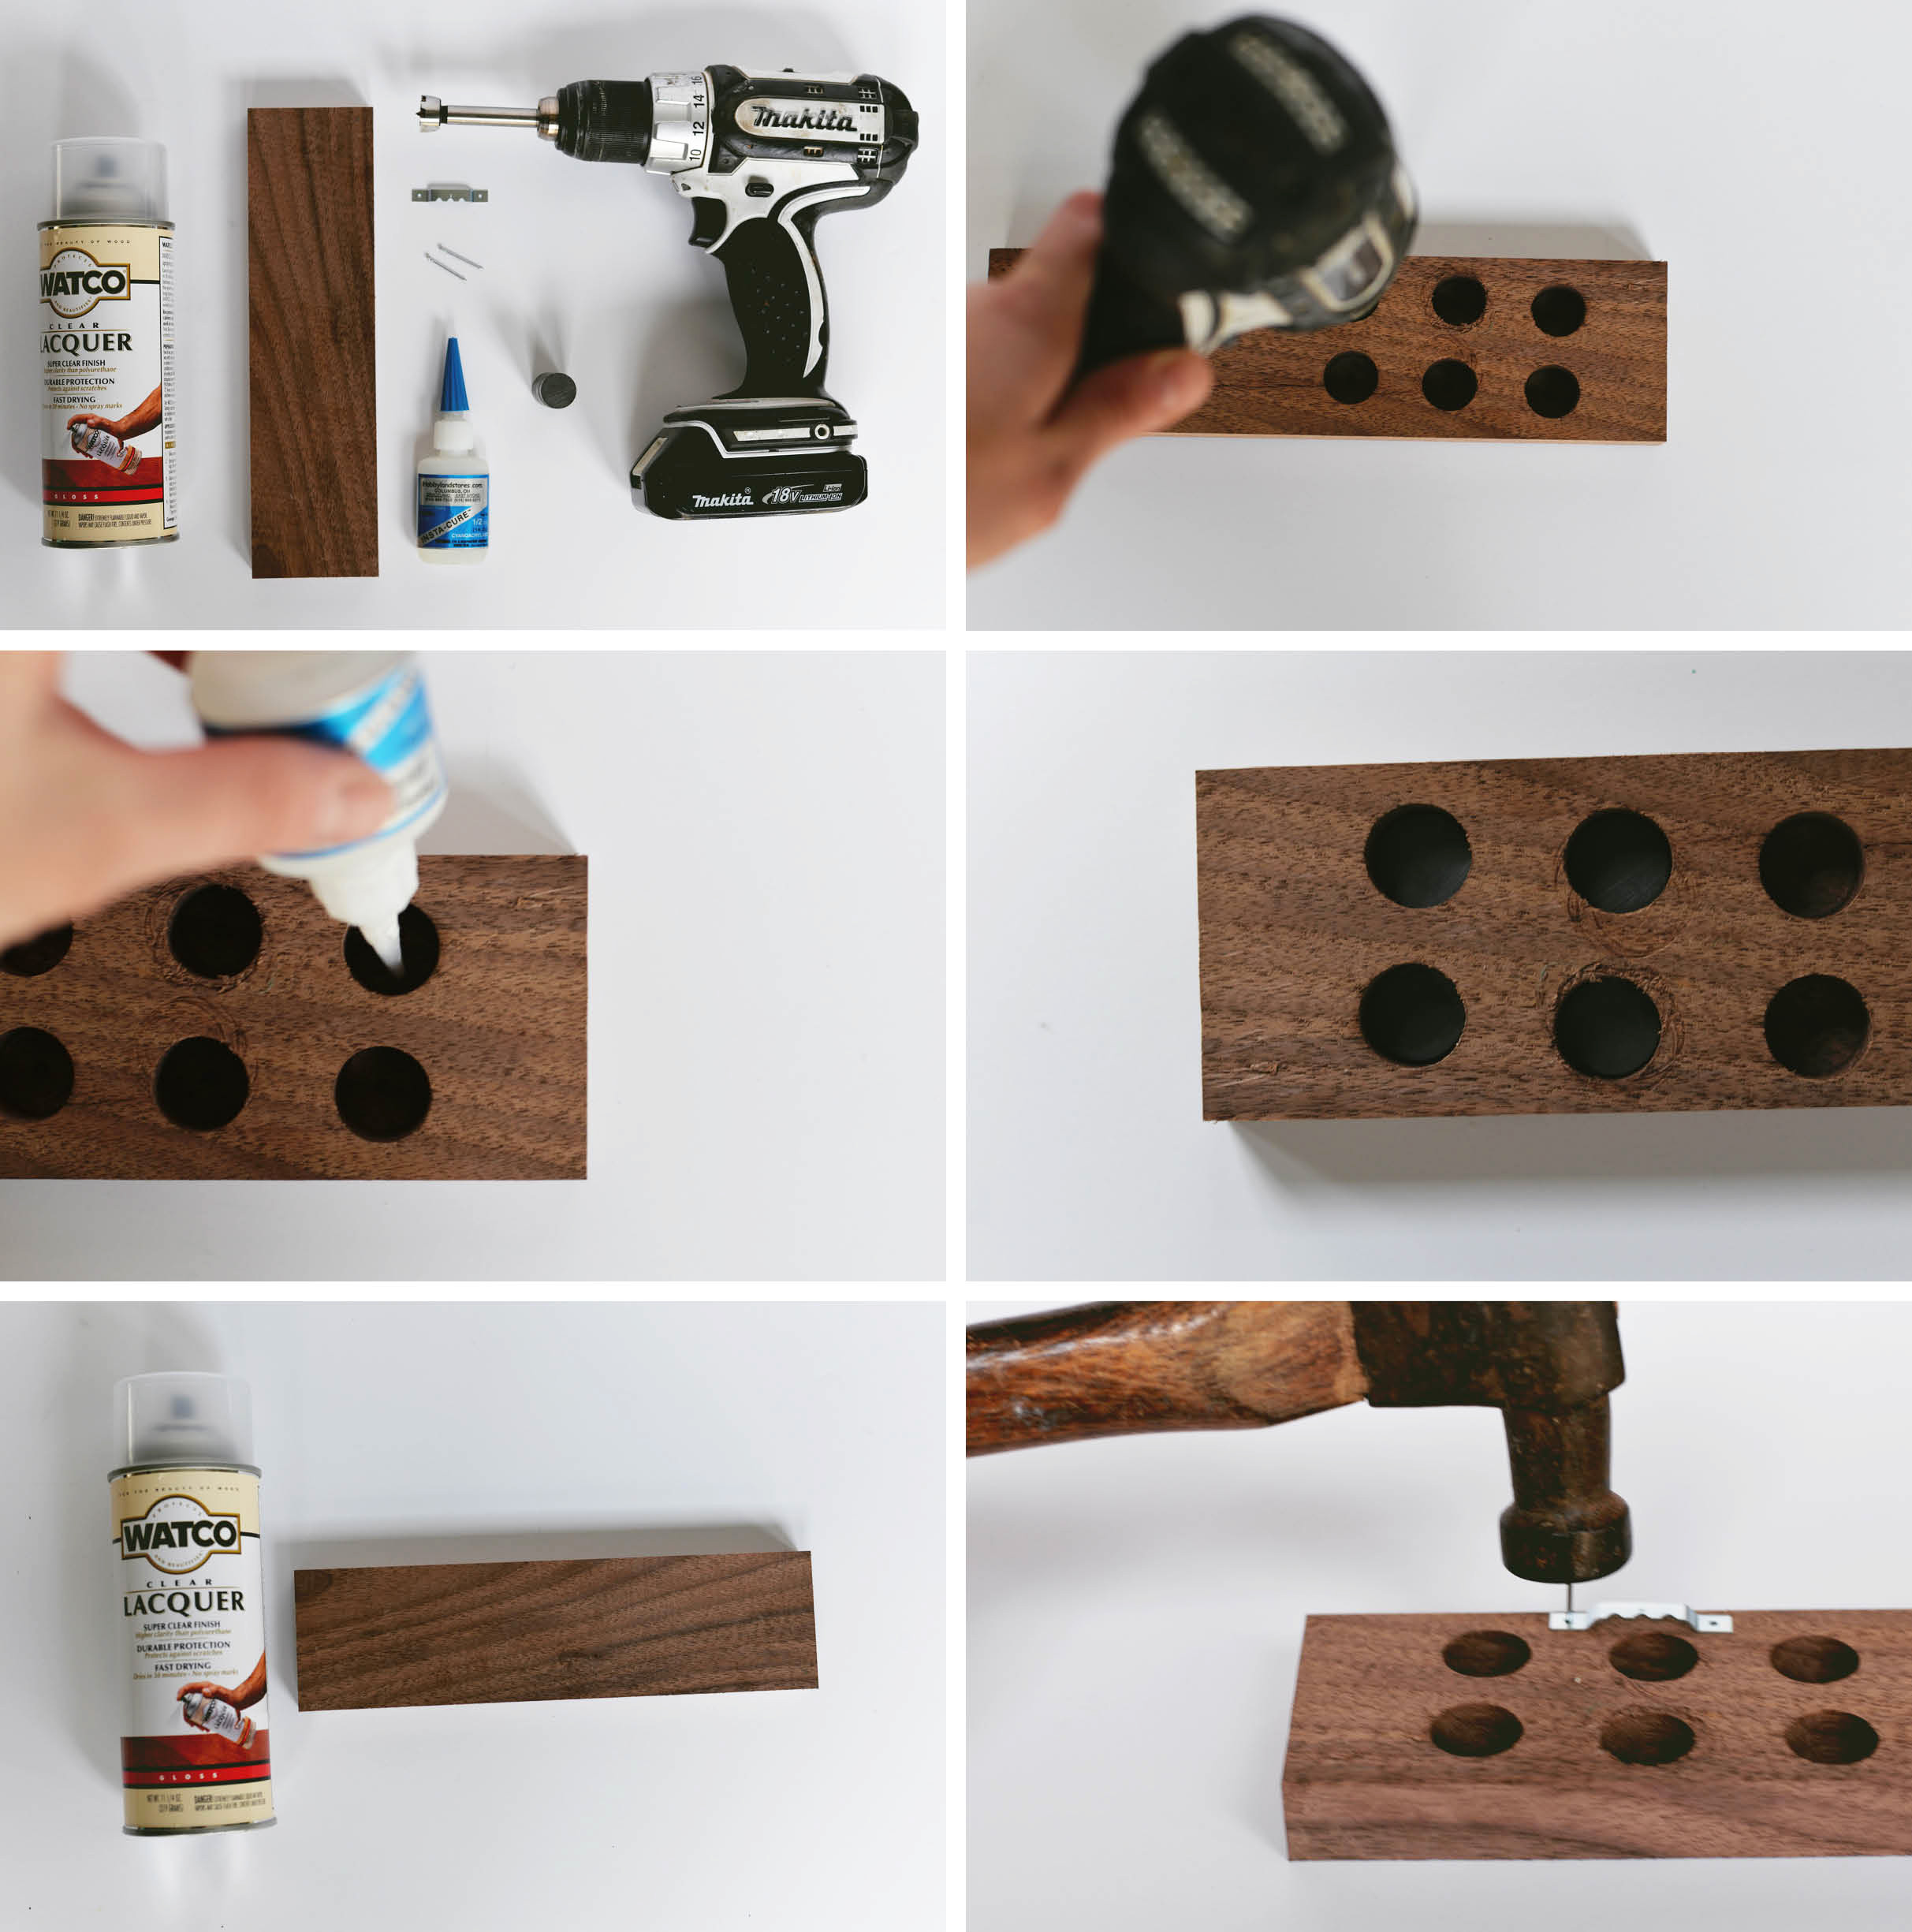 Best ideas about DIY Magnetic Knife Holder
. Save or Pin DIY Magnetic Knife Holder Now.